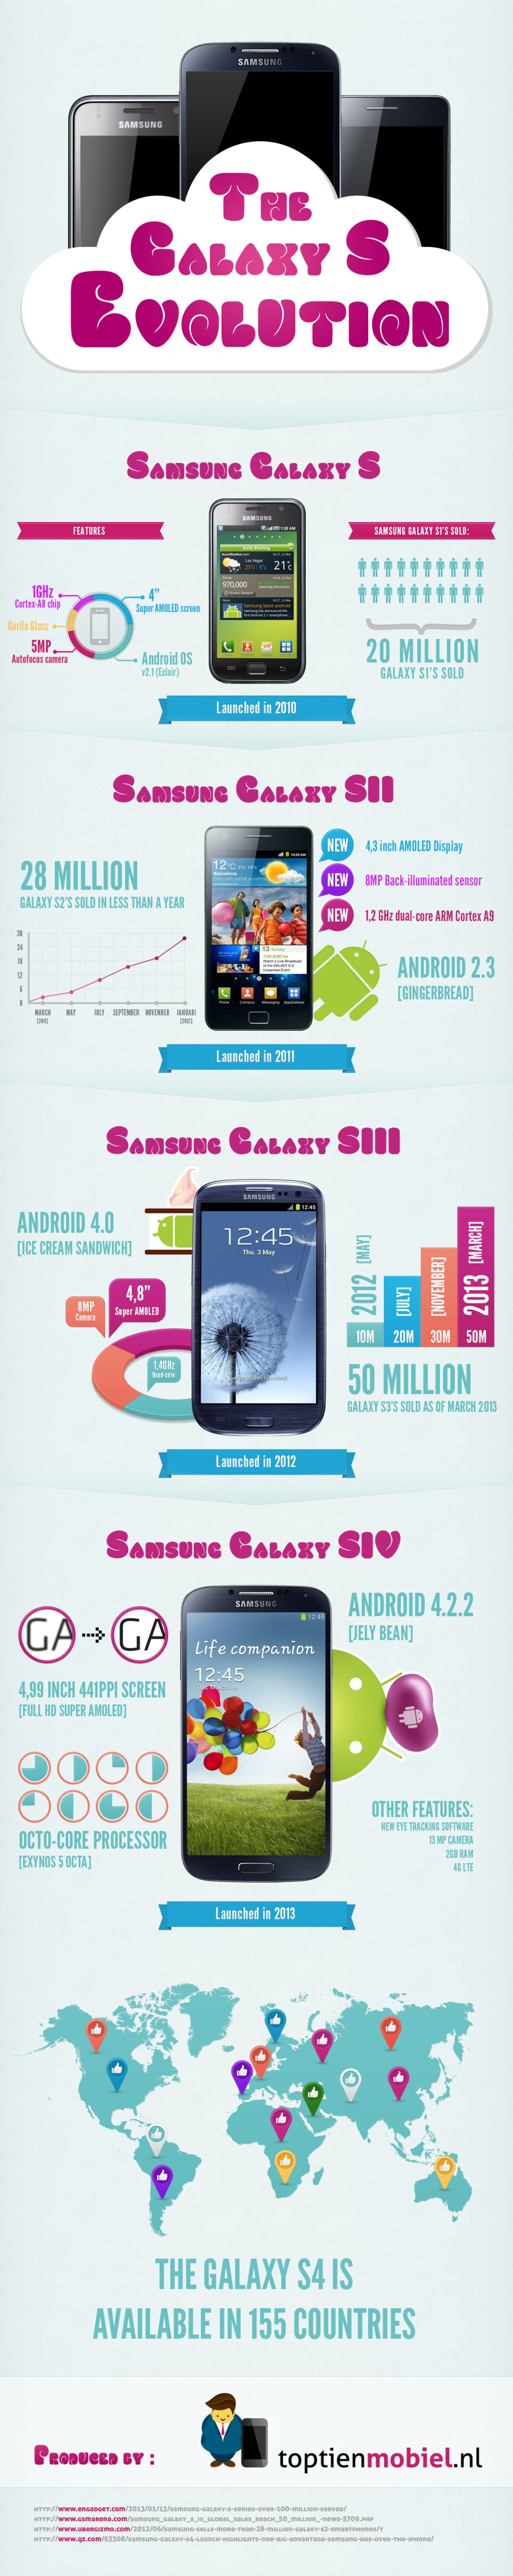 samsung-galaxy-s-infographic